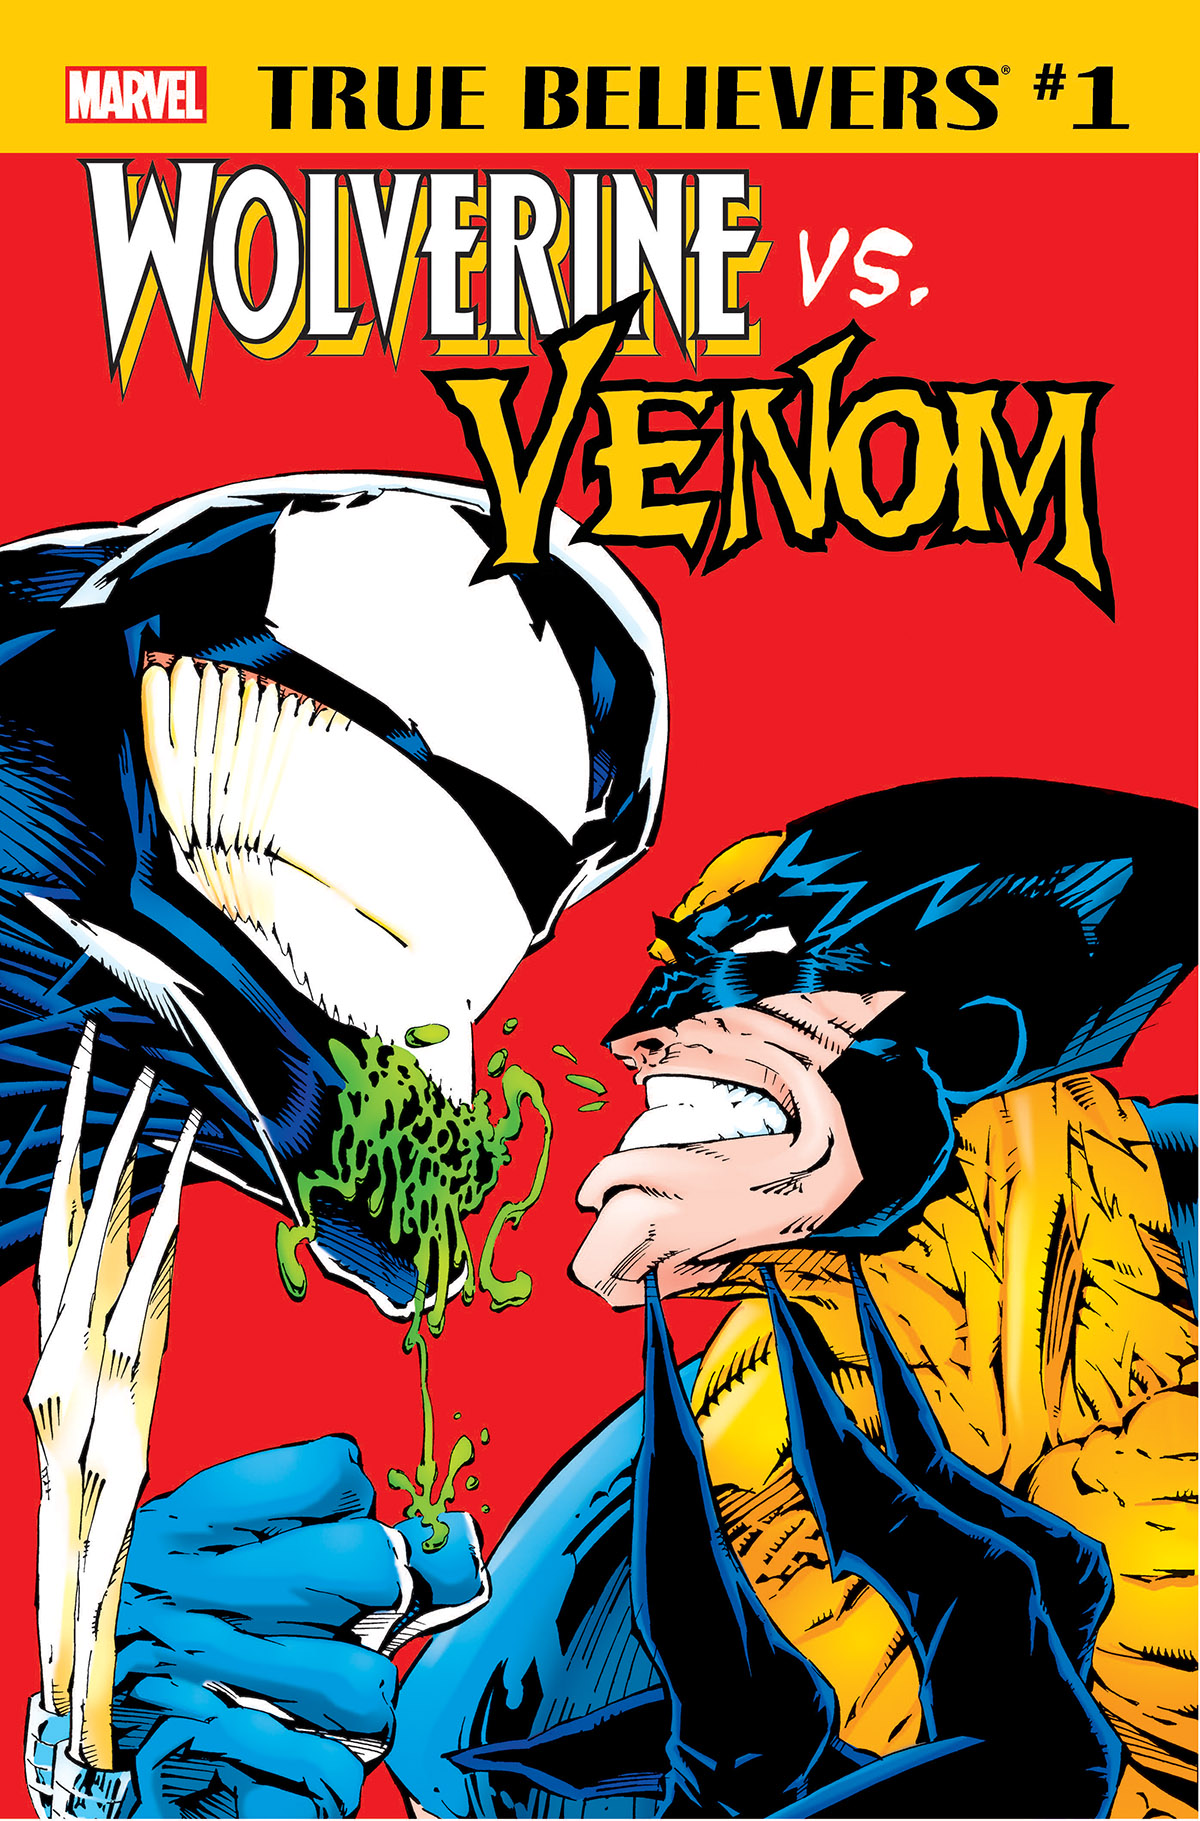 Wolverine vs venom